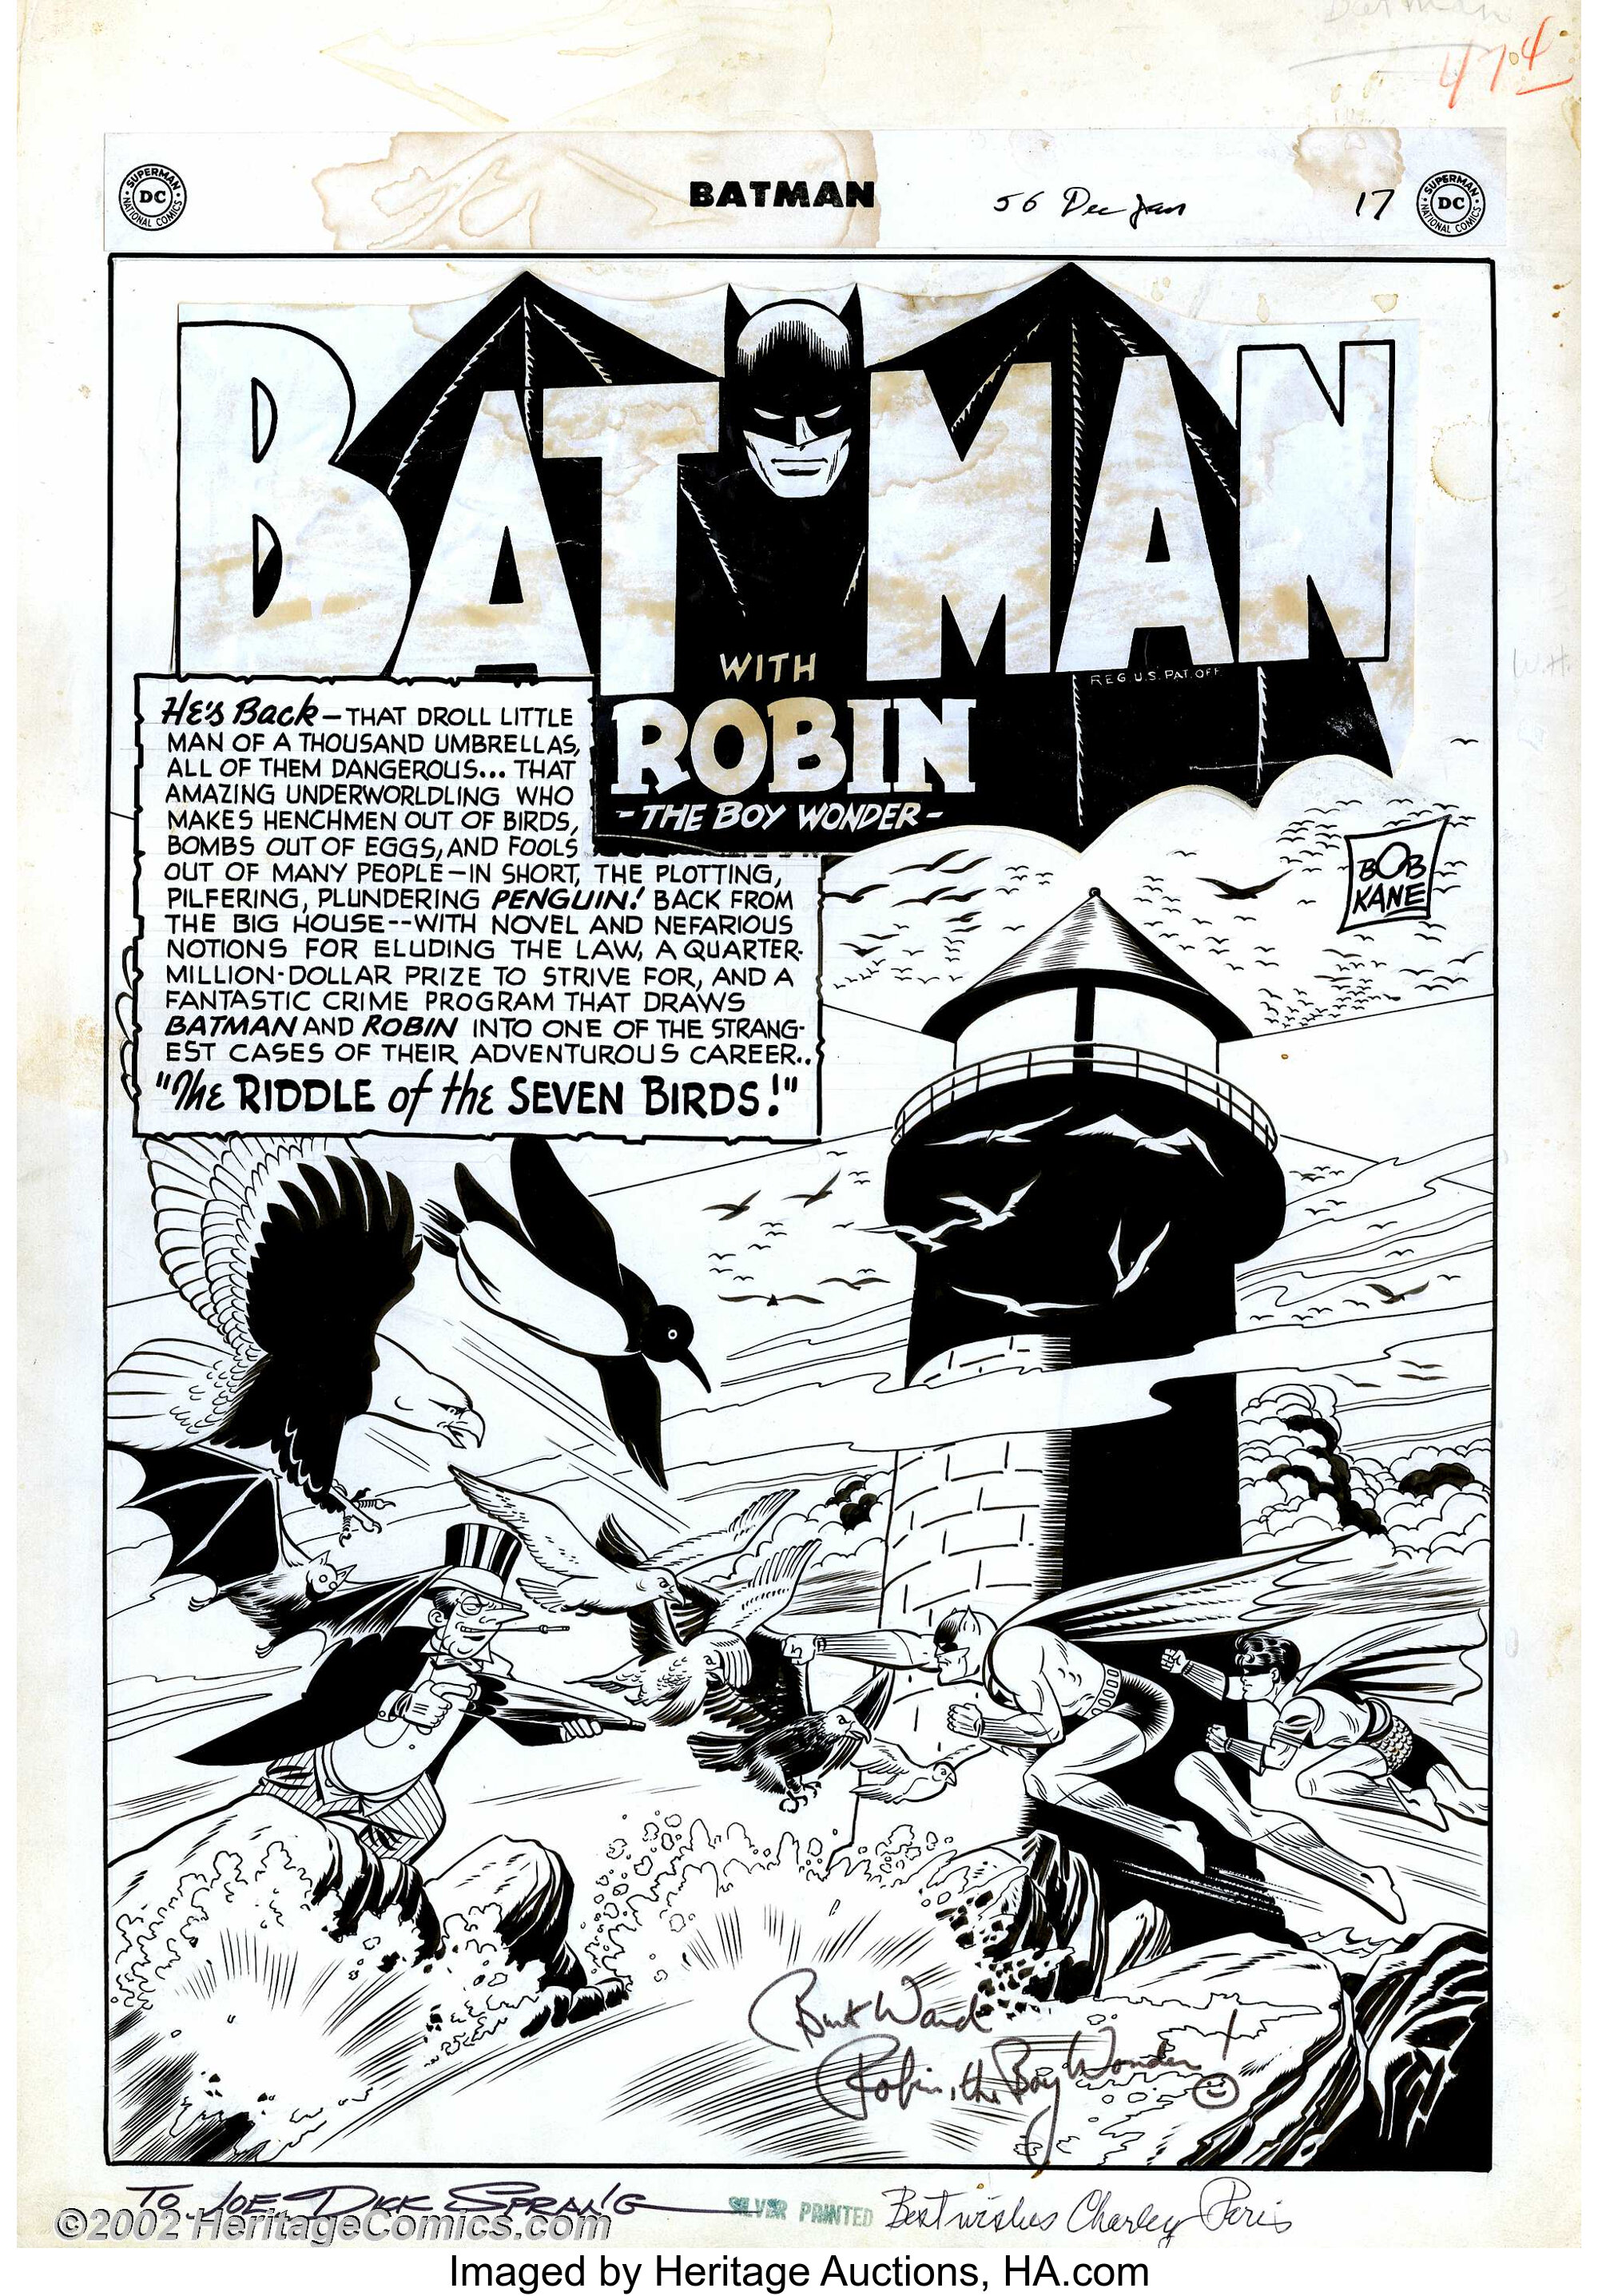 Dick Sprang and Charles Paris - Original Art for Batman #56 Complete | Lot  #6087 | Heritage Auctions